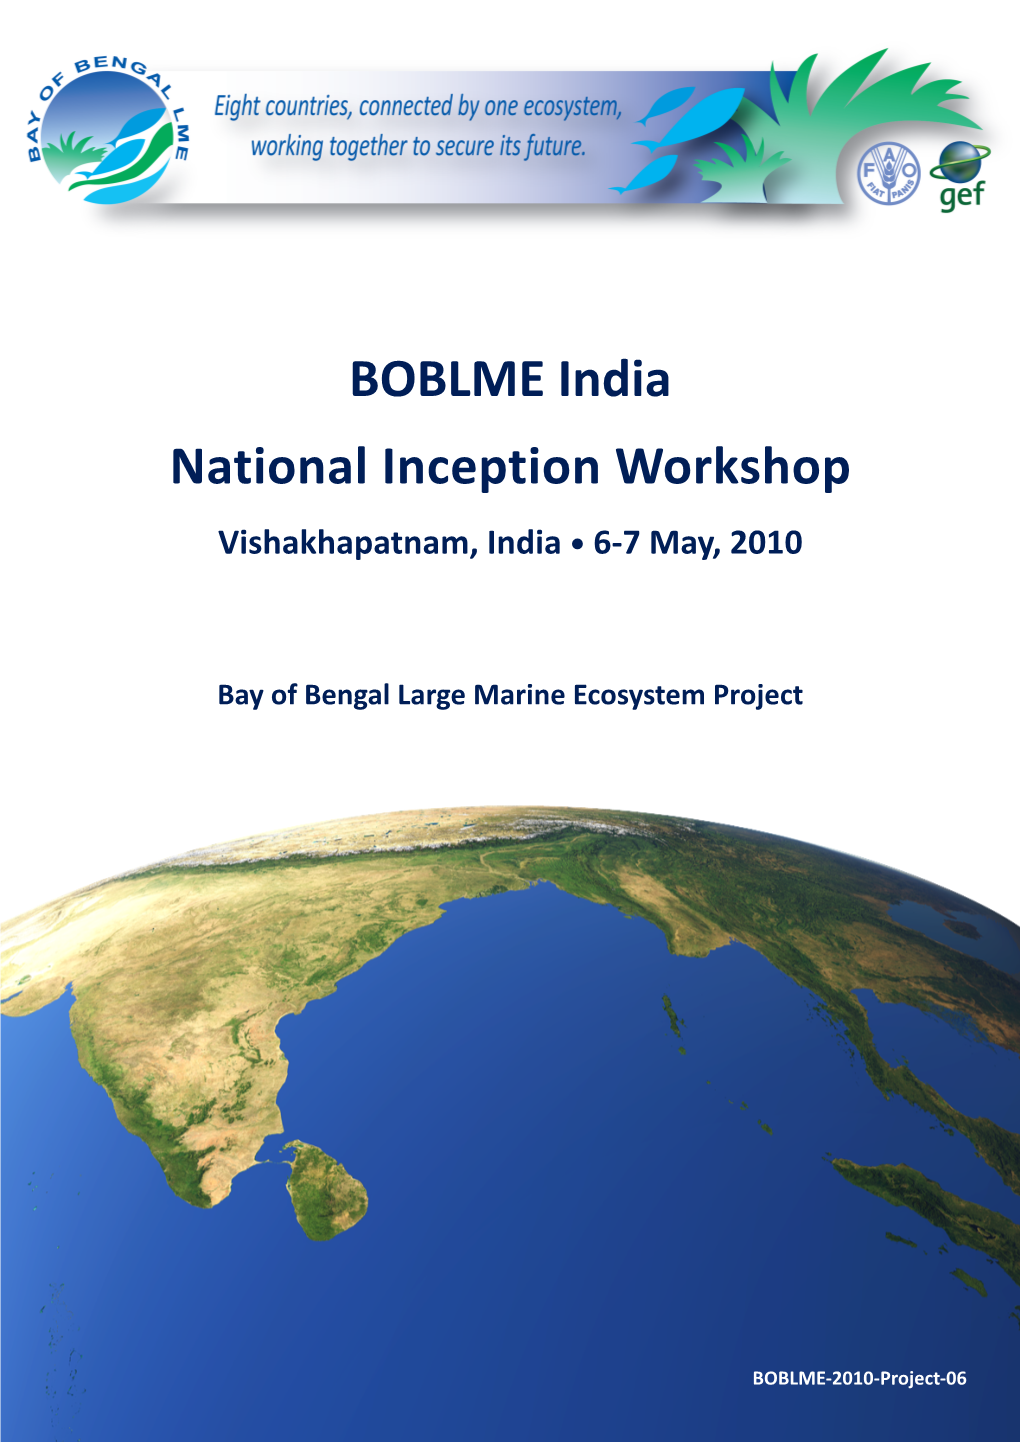 BOBLME India National Inception Workshop